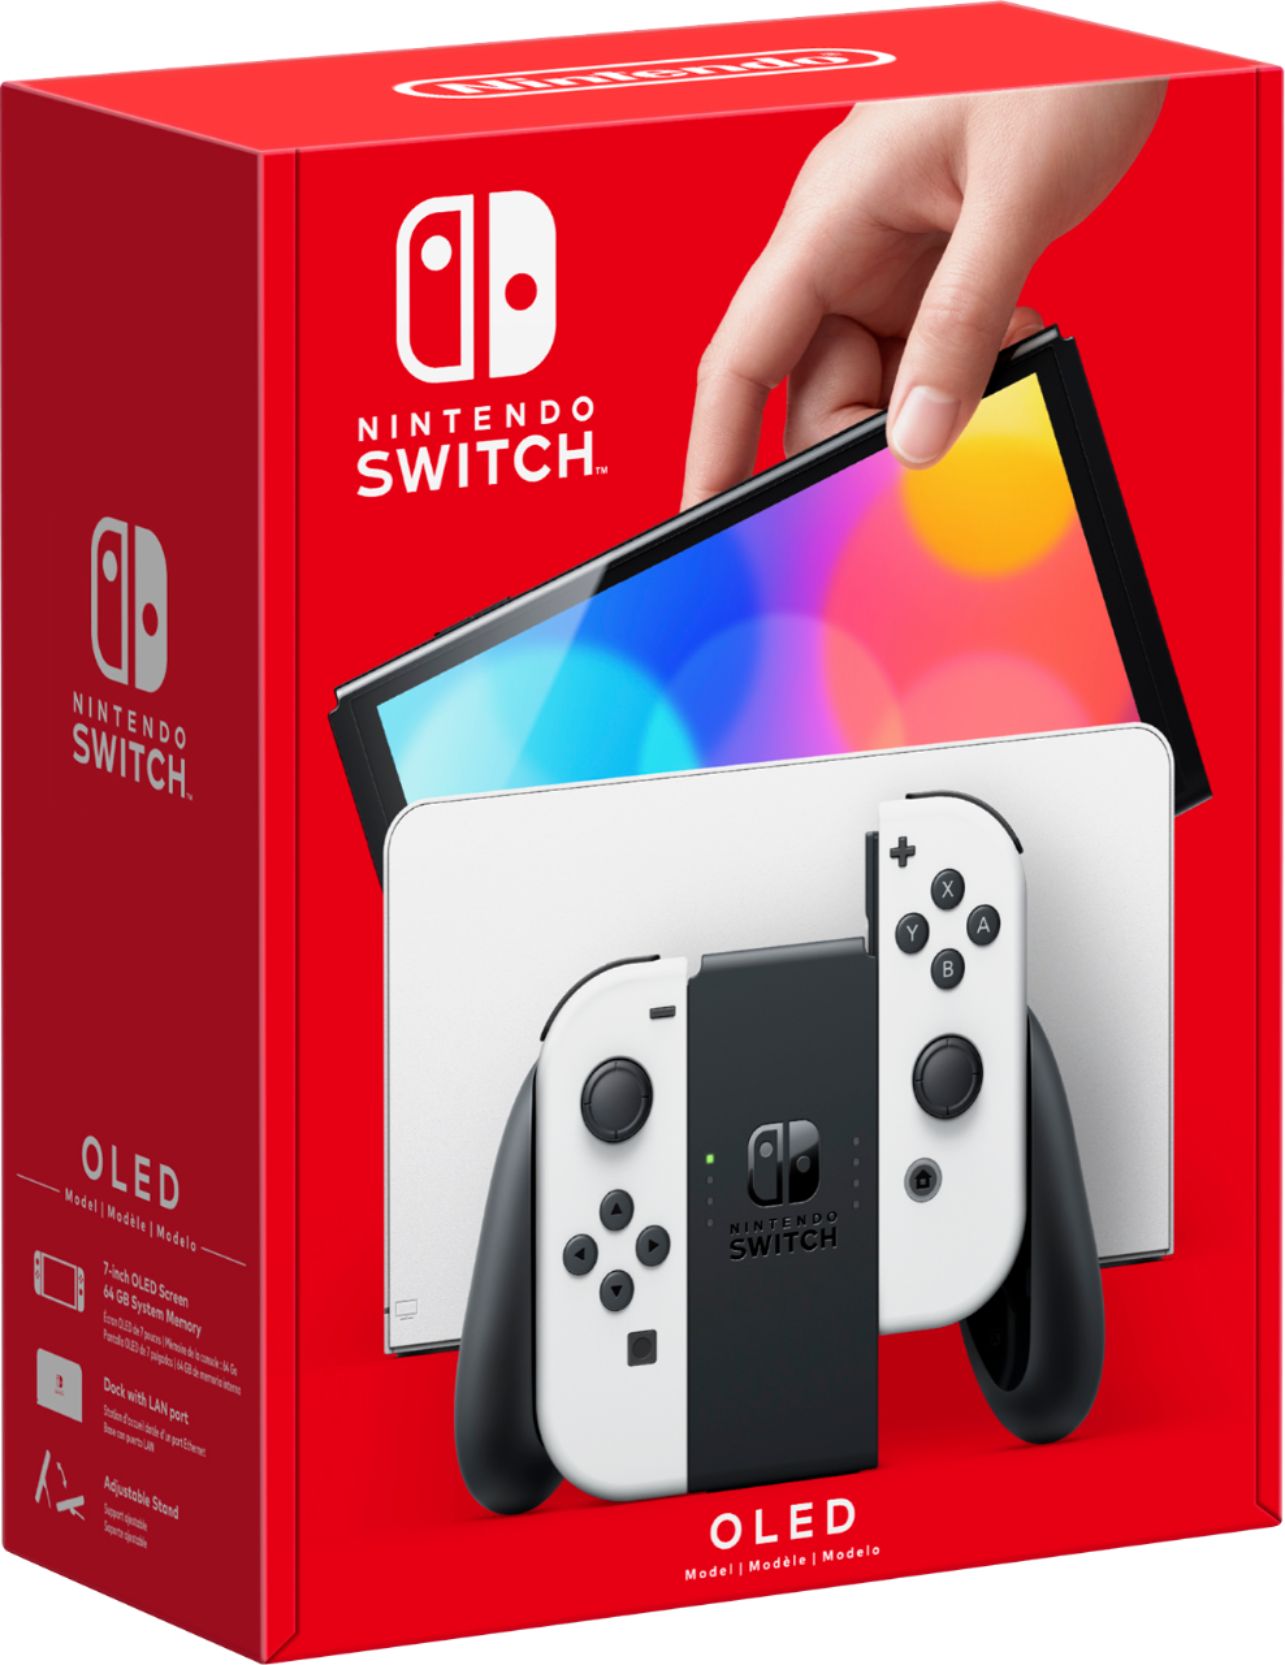 18560円 市販 Nintendo Switch NINTENDO SWITCH JOY-CON…